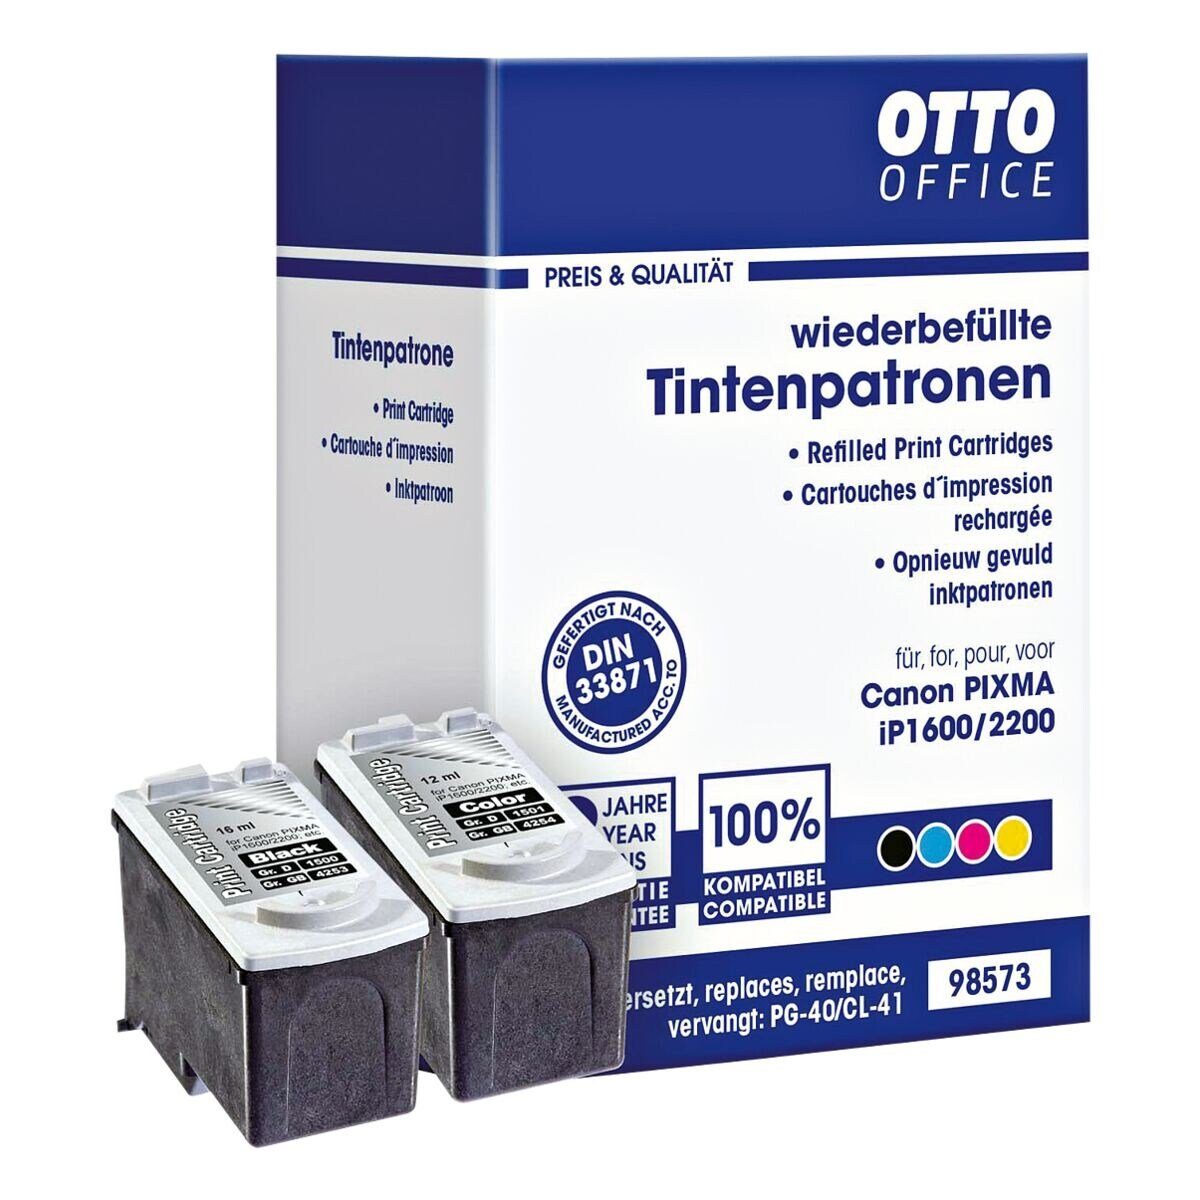 Otto Office Office Tintenpatrone ersetzt Canon schwarz, PACK PG-40/CL-41 CL-41, & (Set, PG-40 3-farbig)